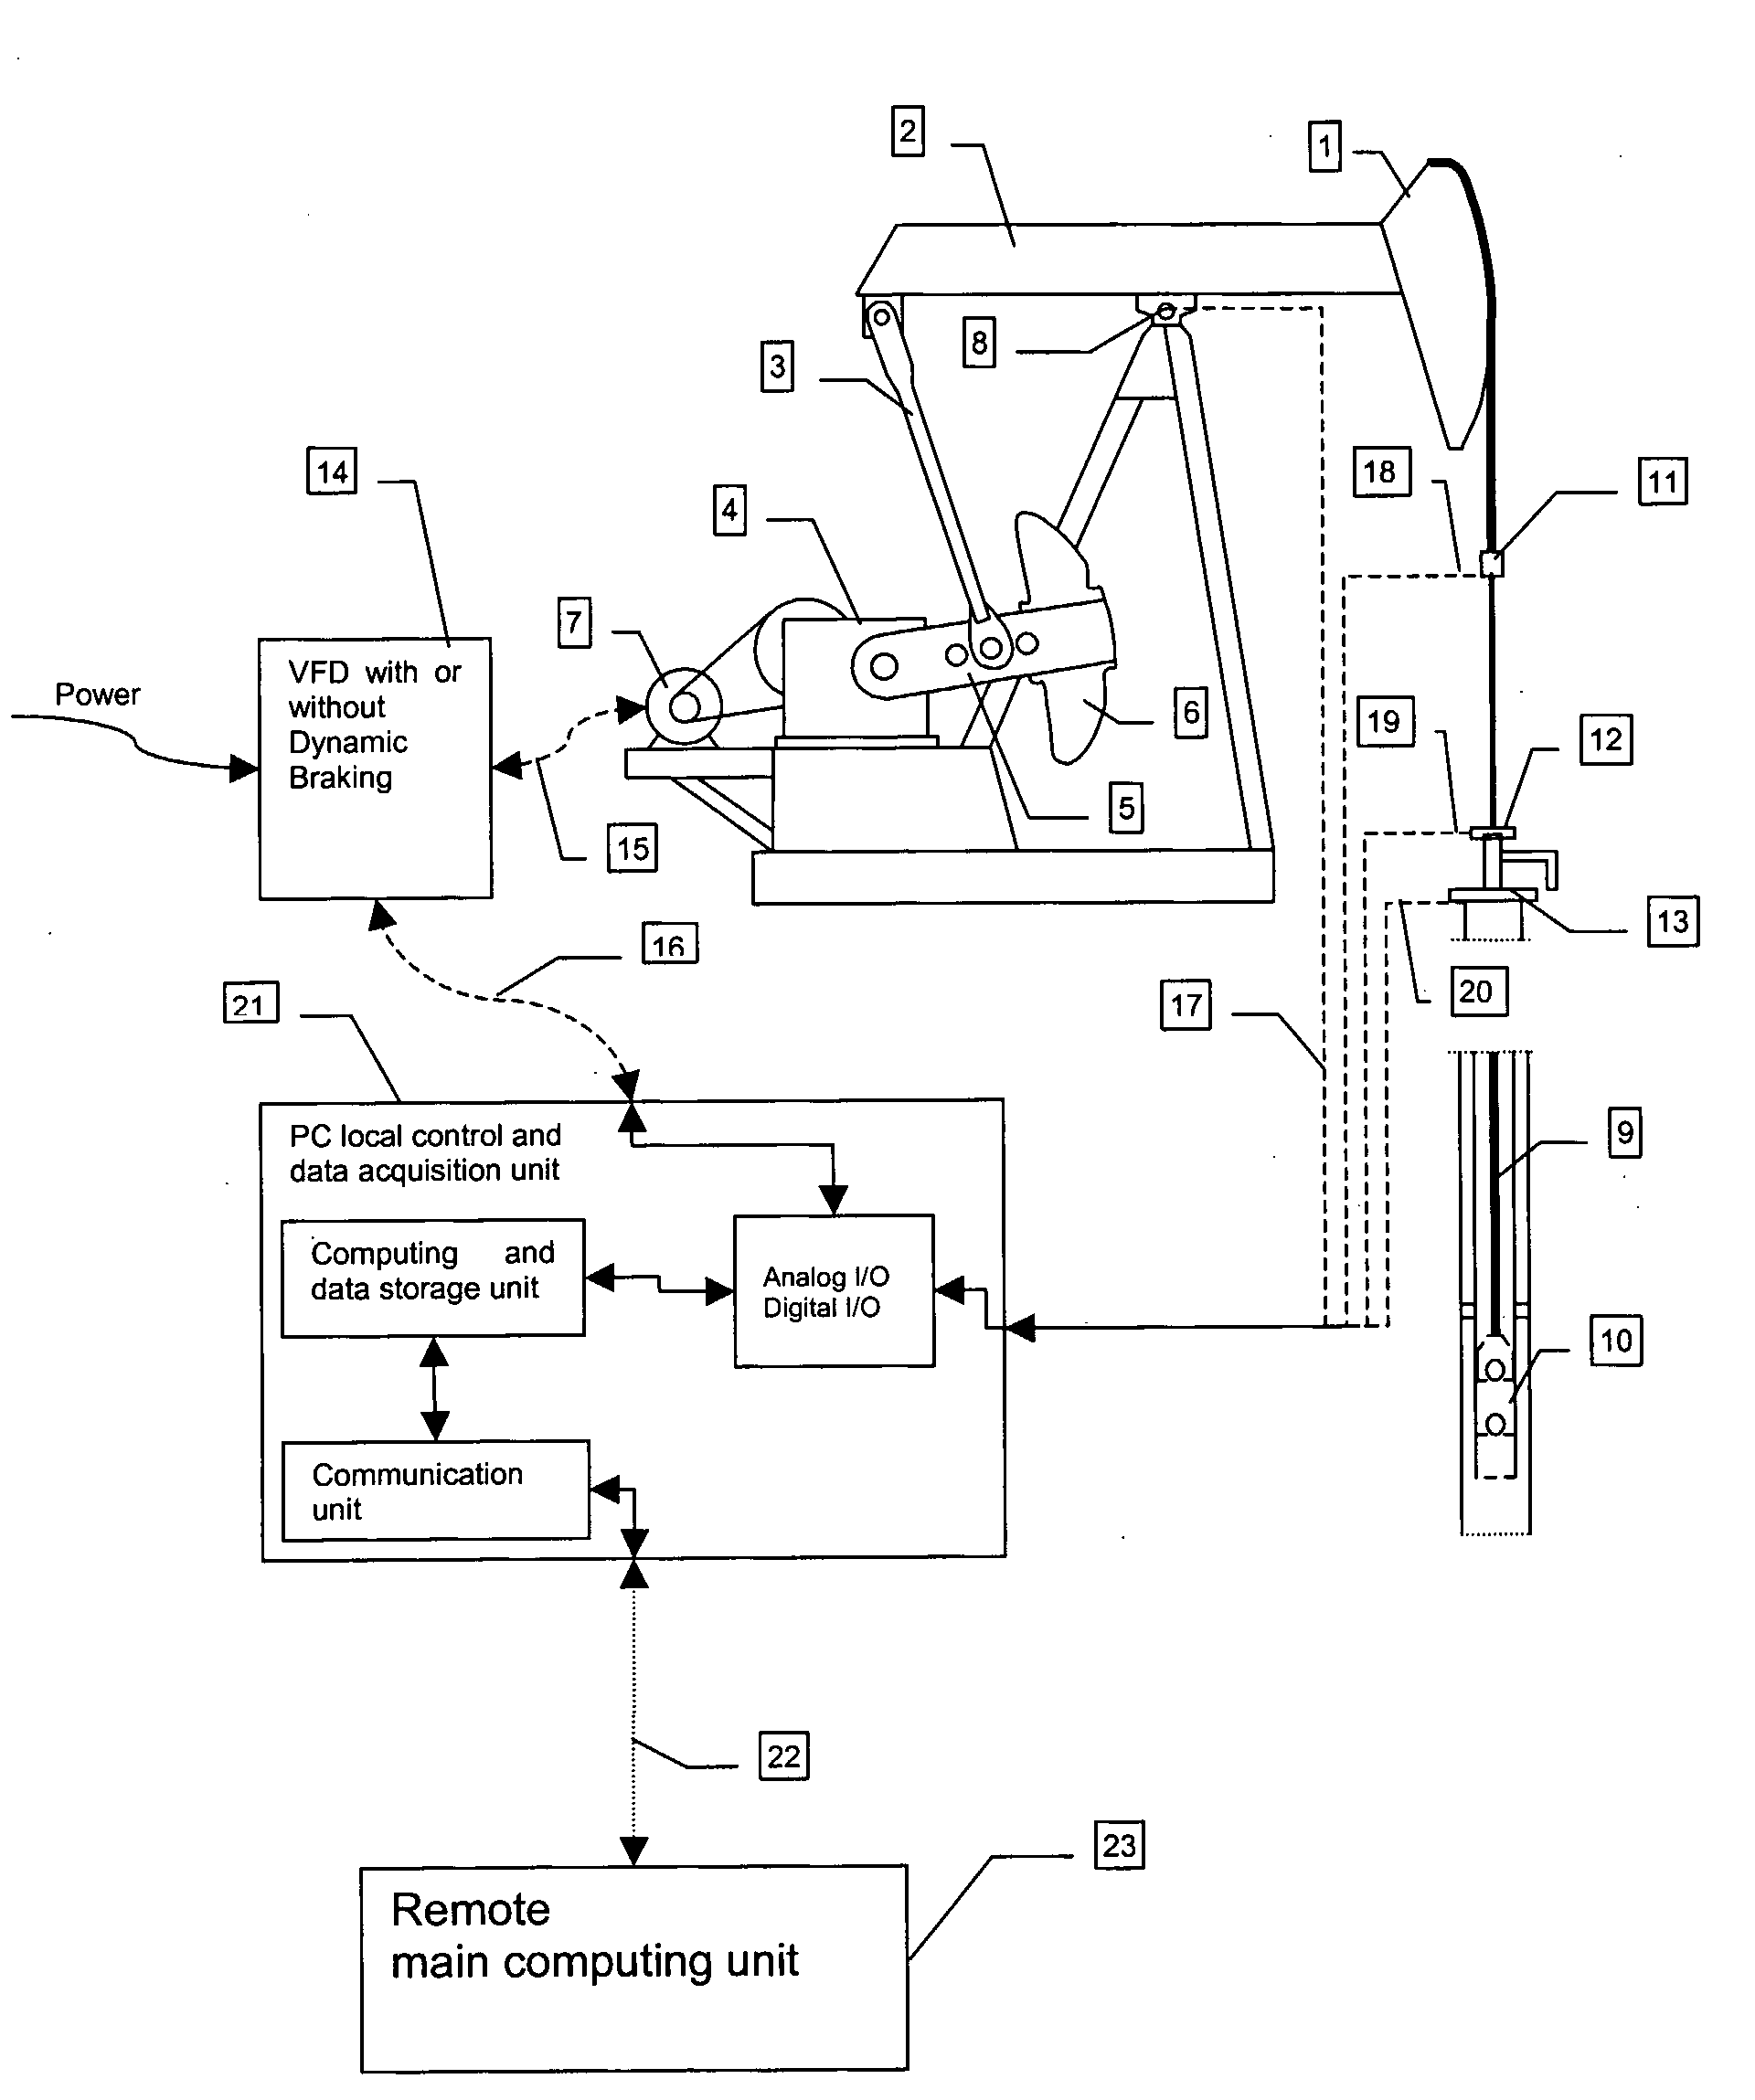 Method and System for Optimizing Downhole Fluid Production